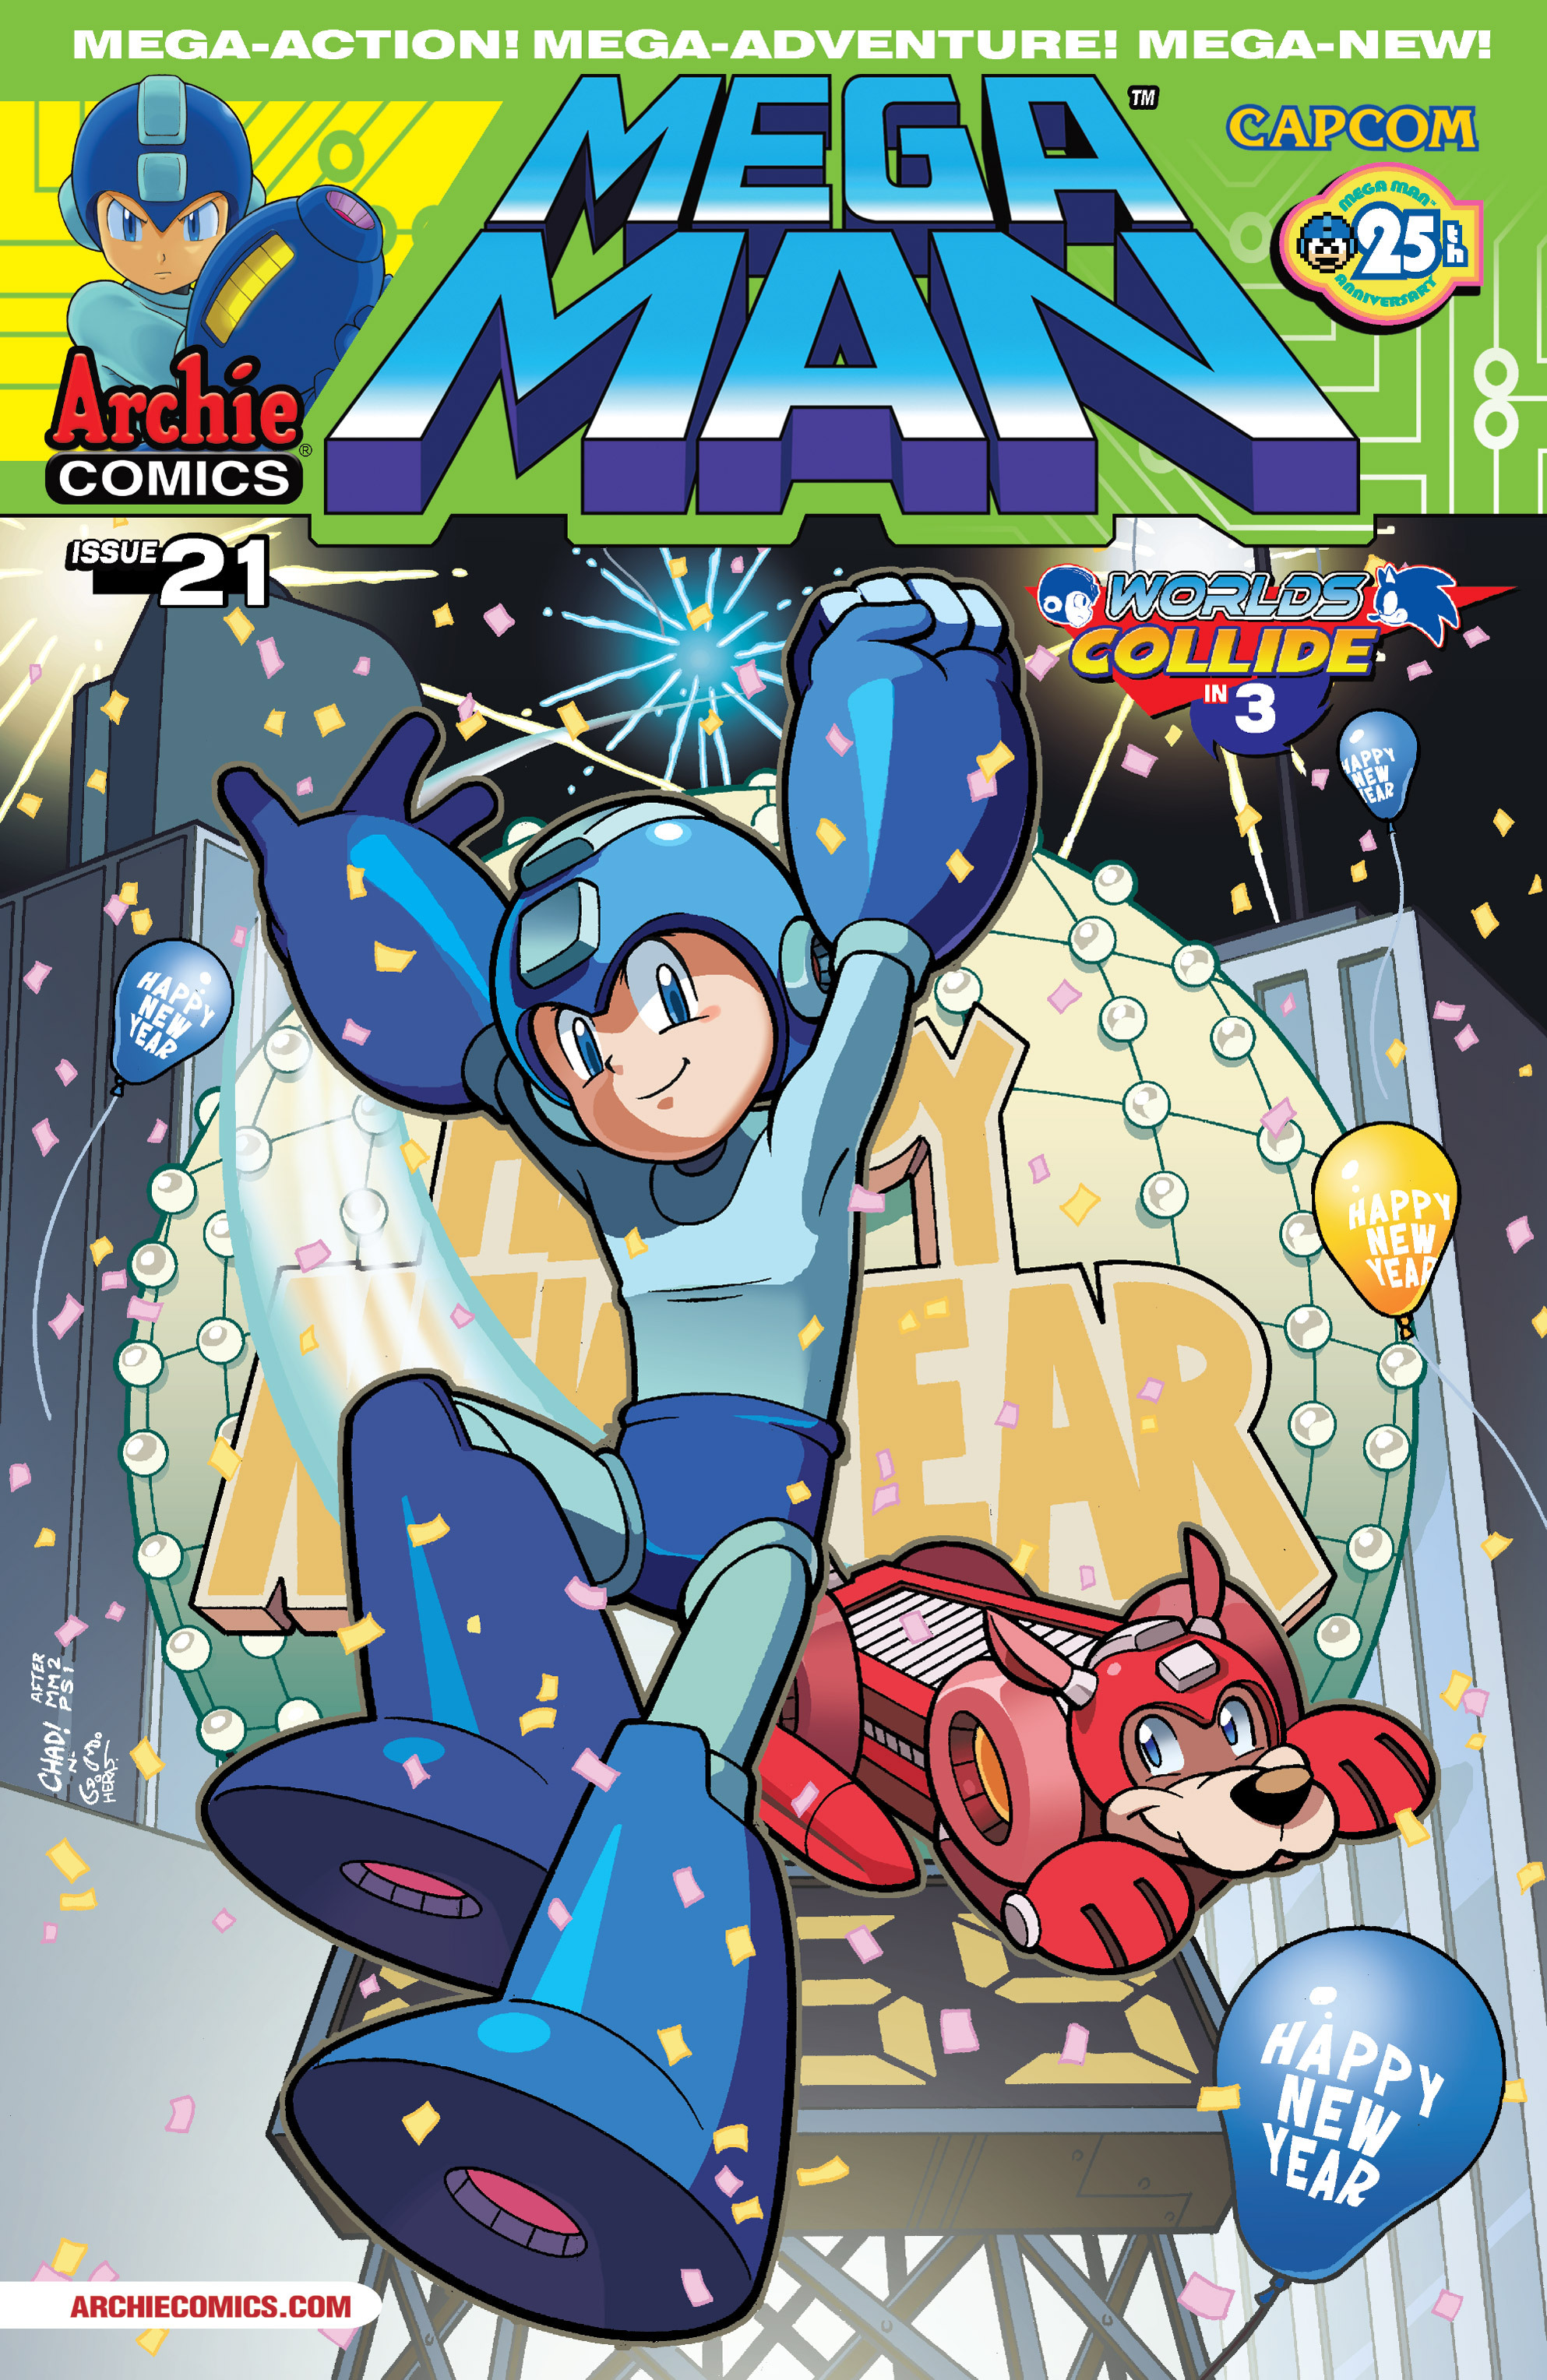 Mega Man Issue 21 Archie Comics Mmkb Fandom 0670